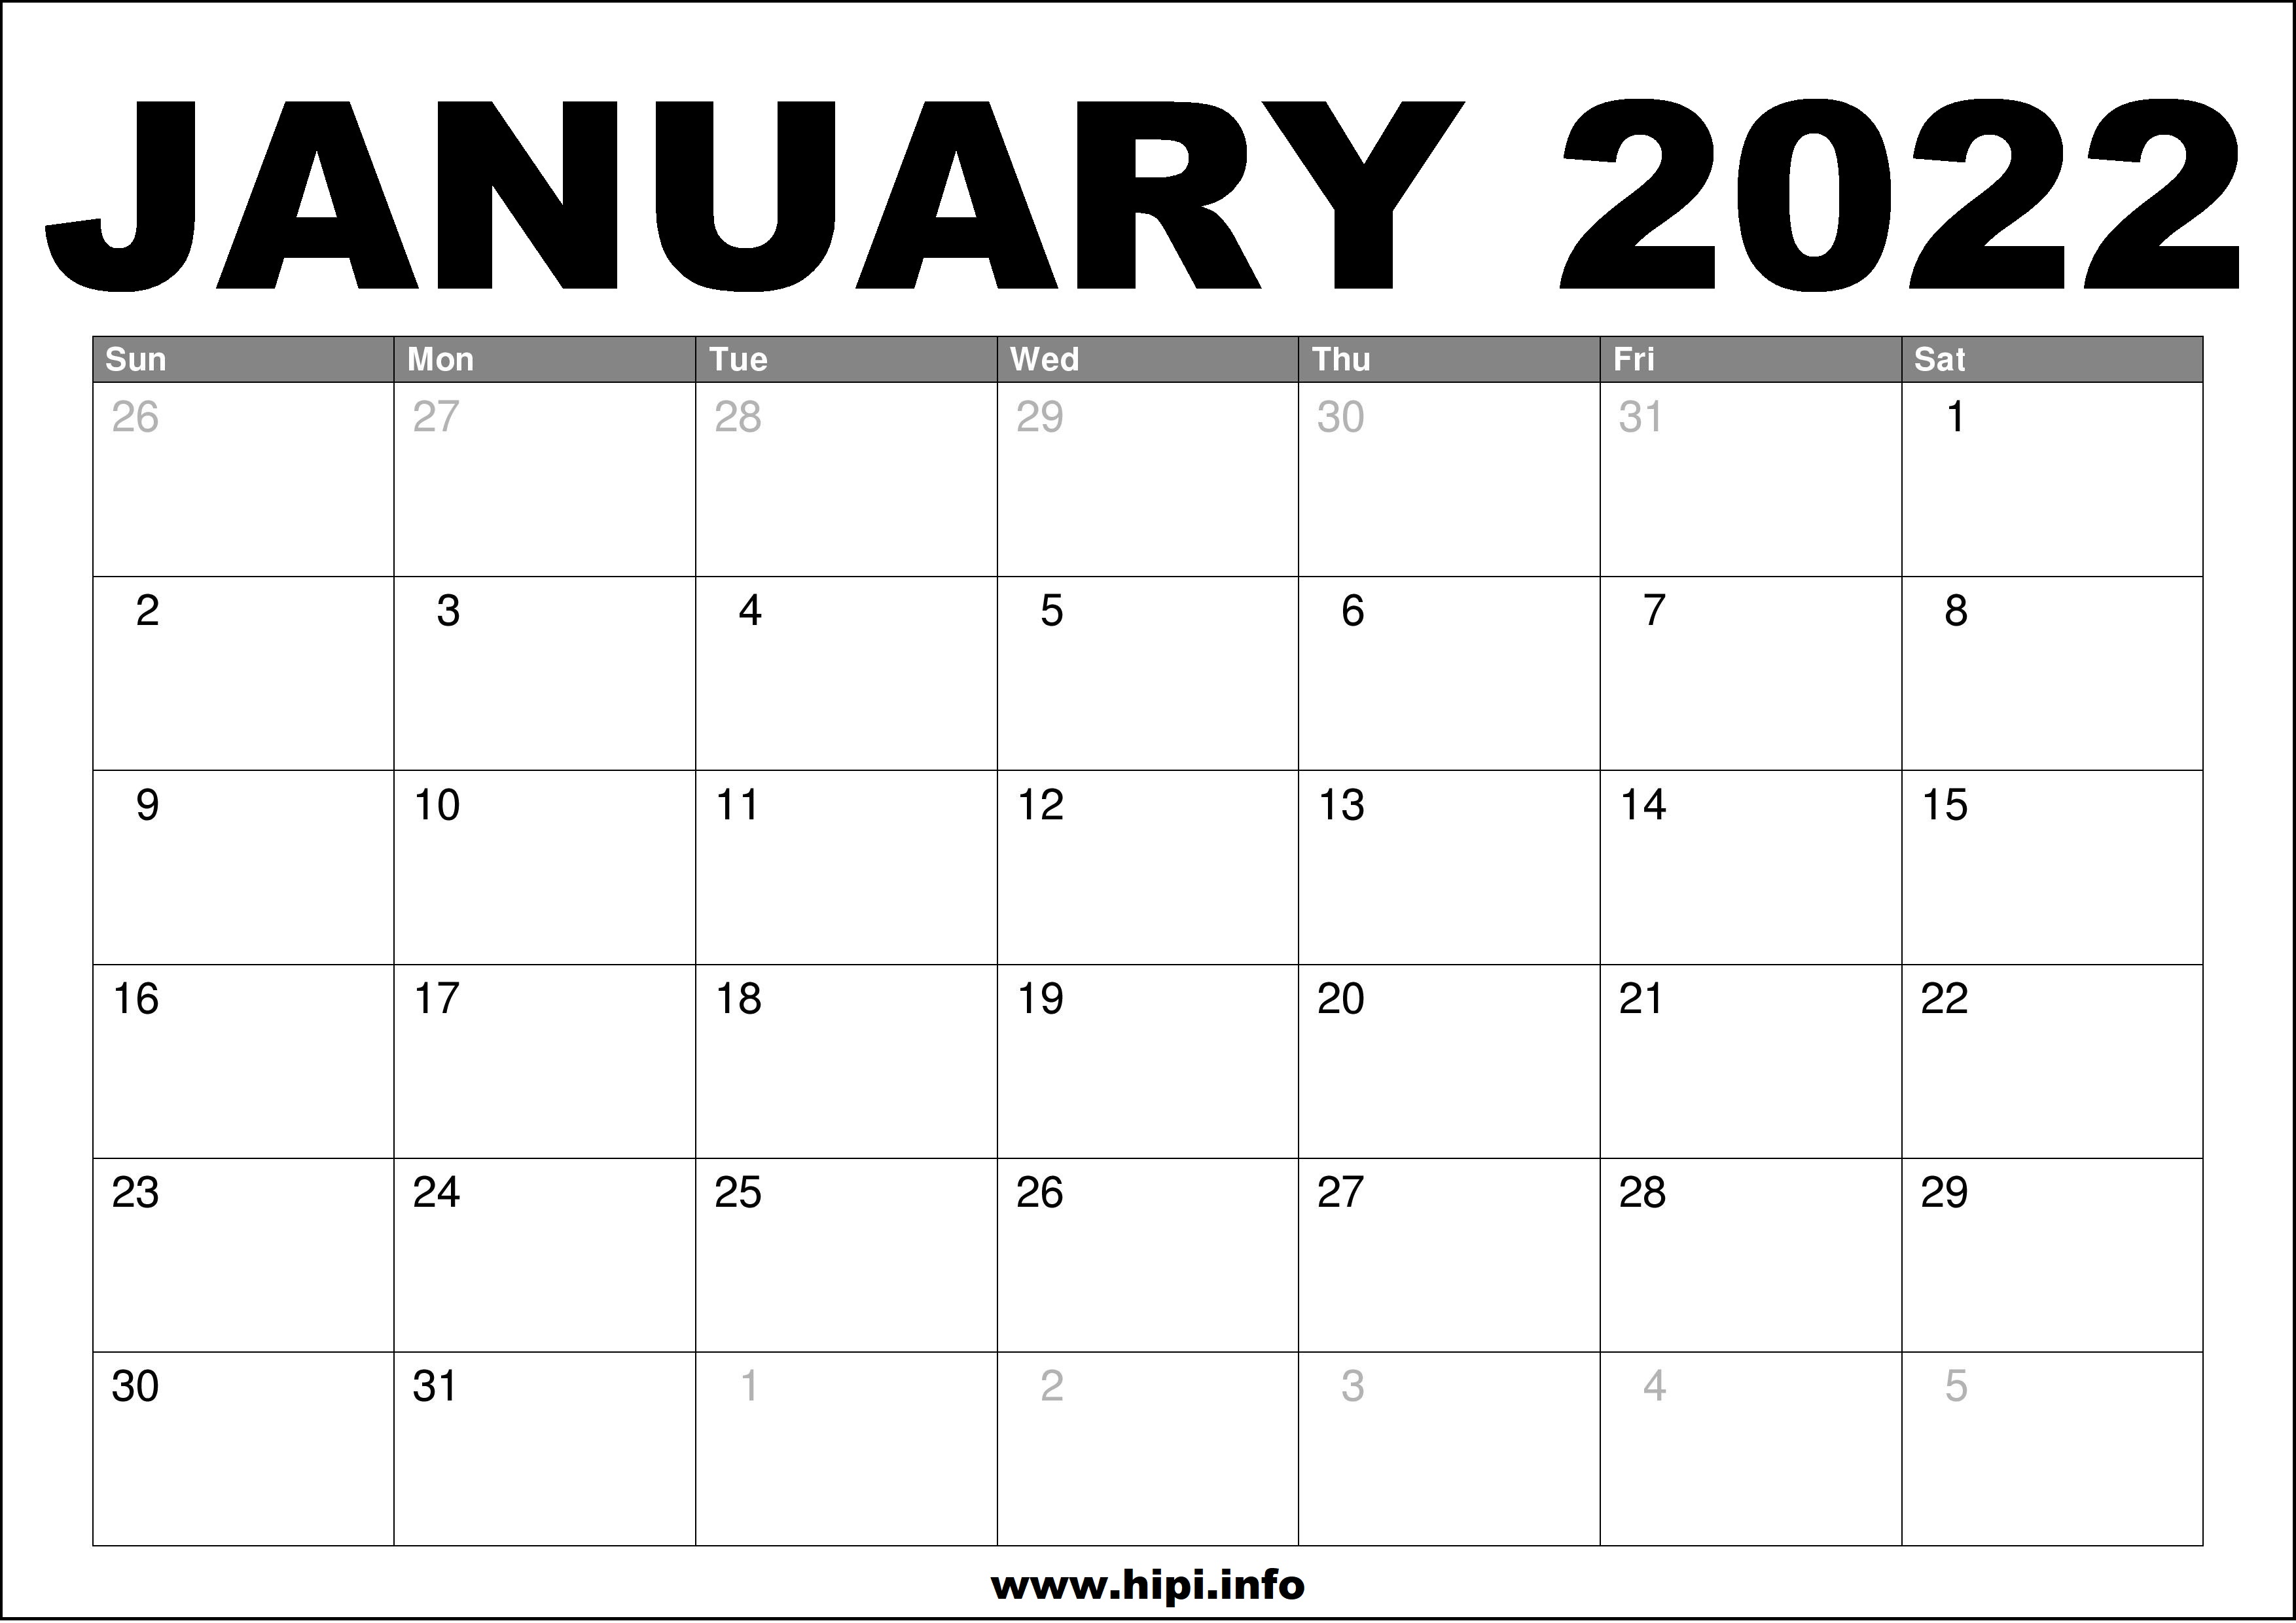 Free Printable Calendar 2022 January.January 2022 Calendar Printable Free Hipi Info Calendars Printable Free